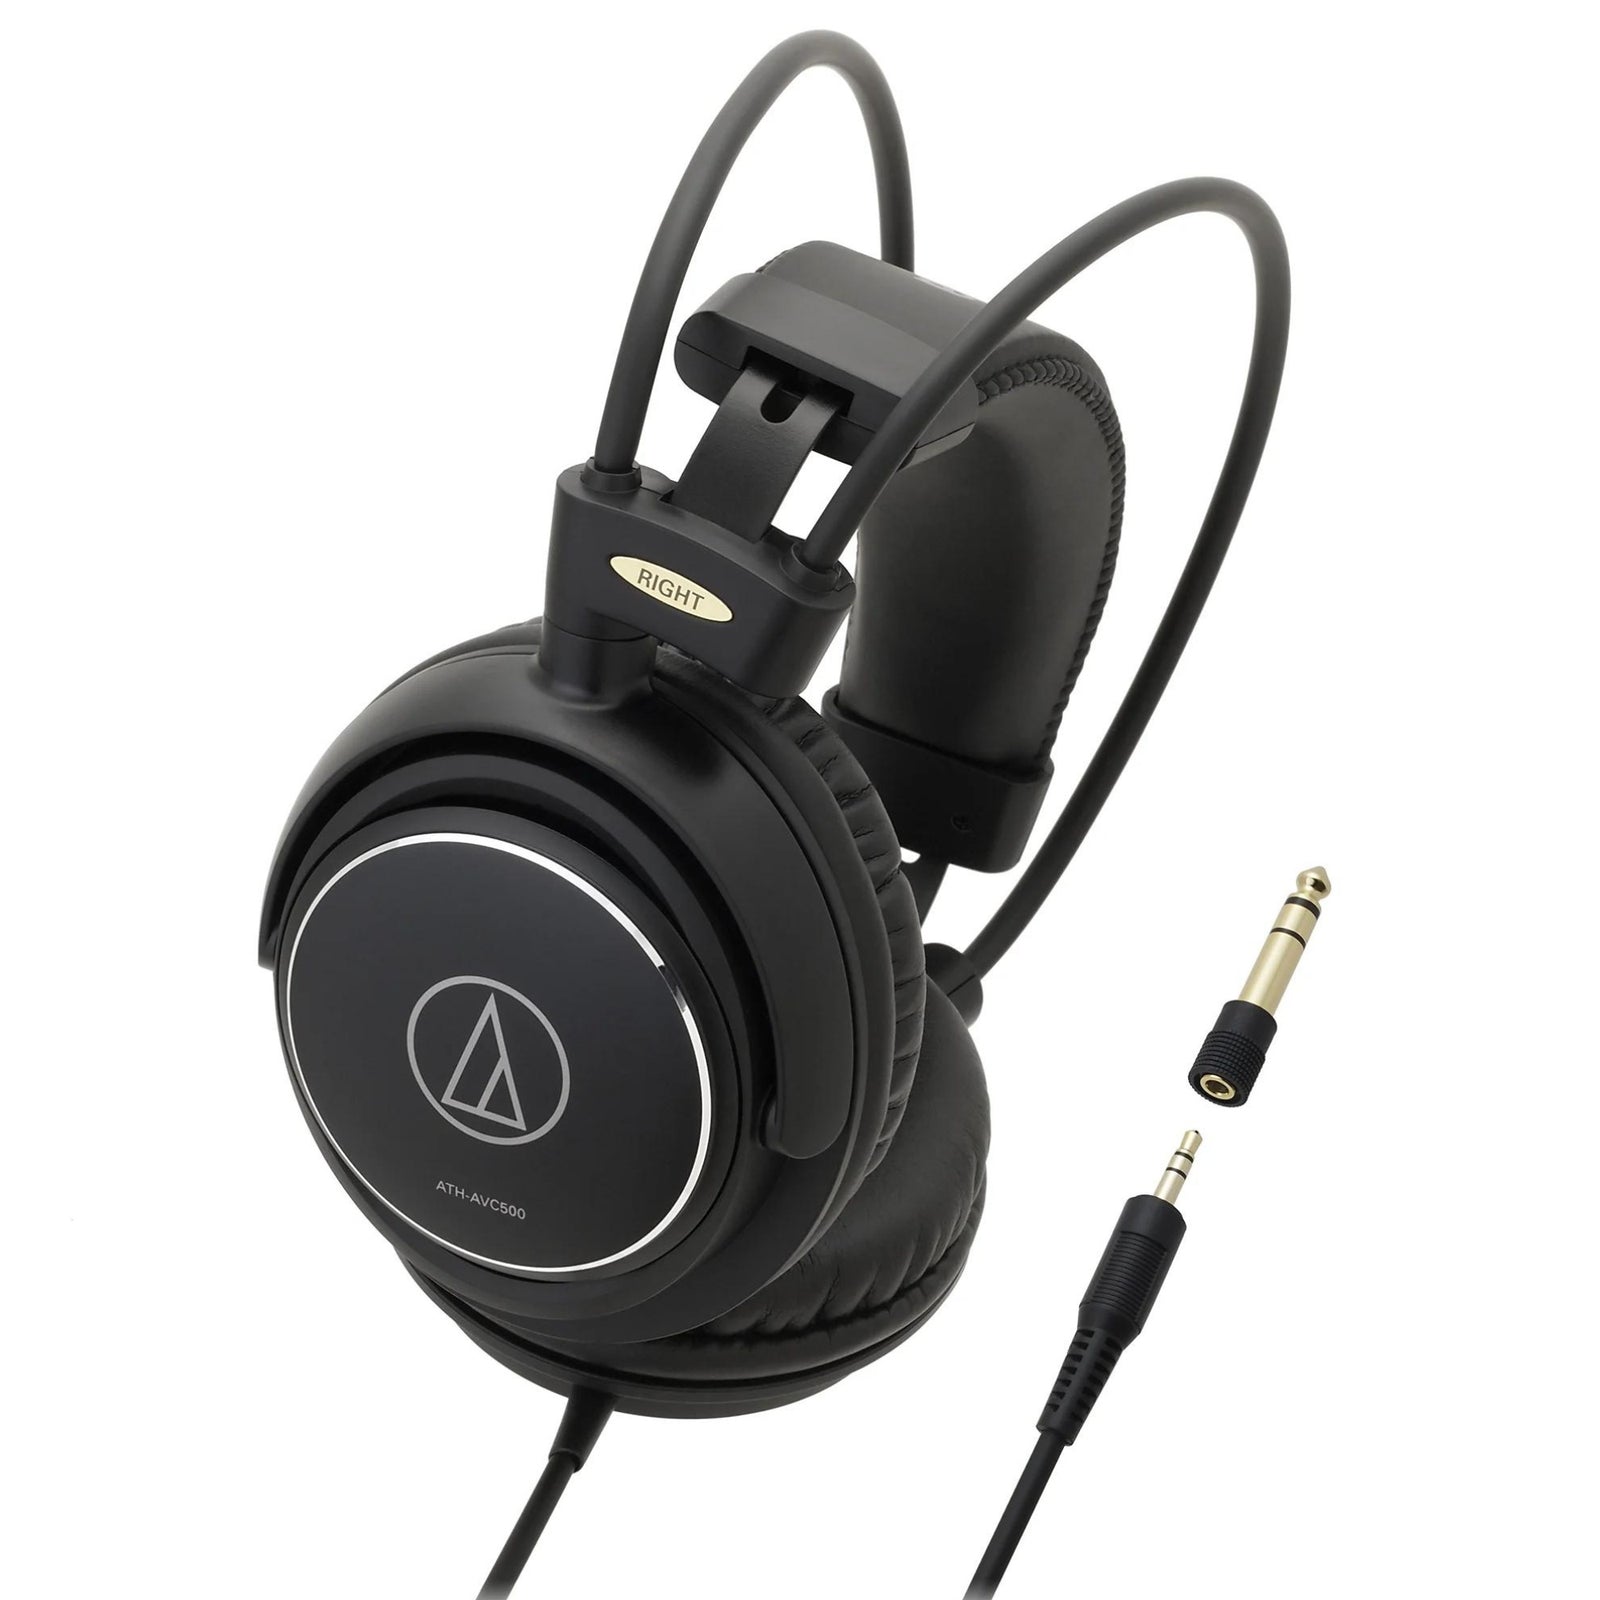 Audio Technica Ath-avc500 Closed-back Dynamic Headphones